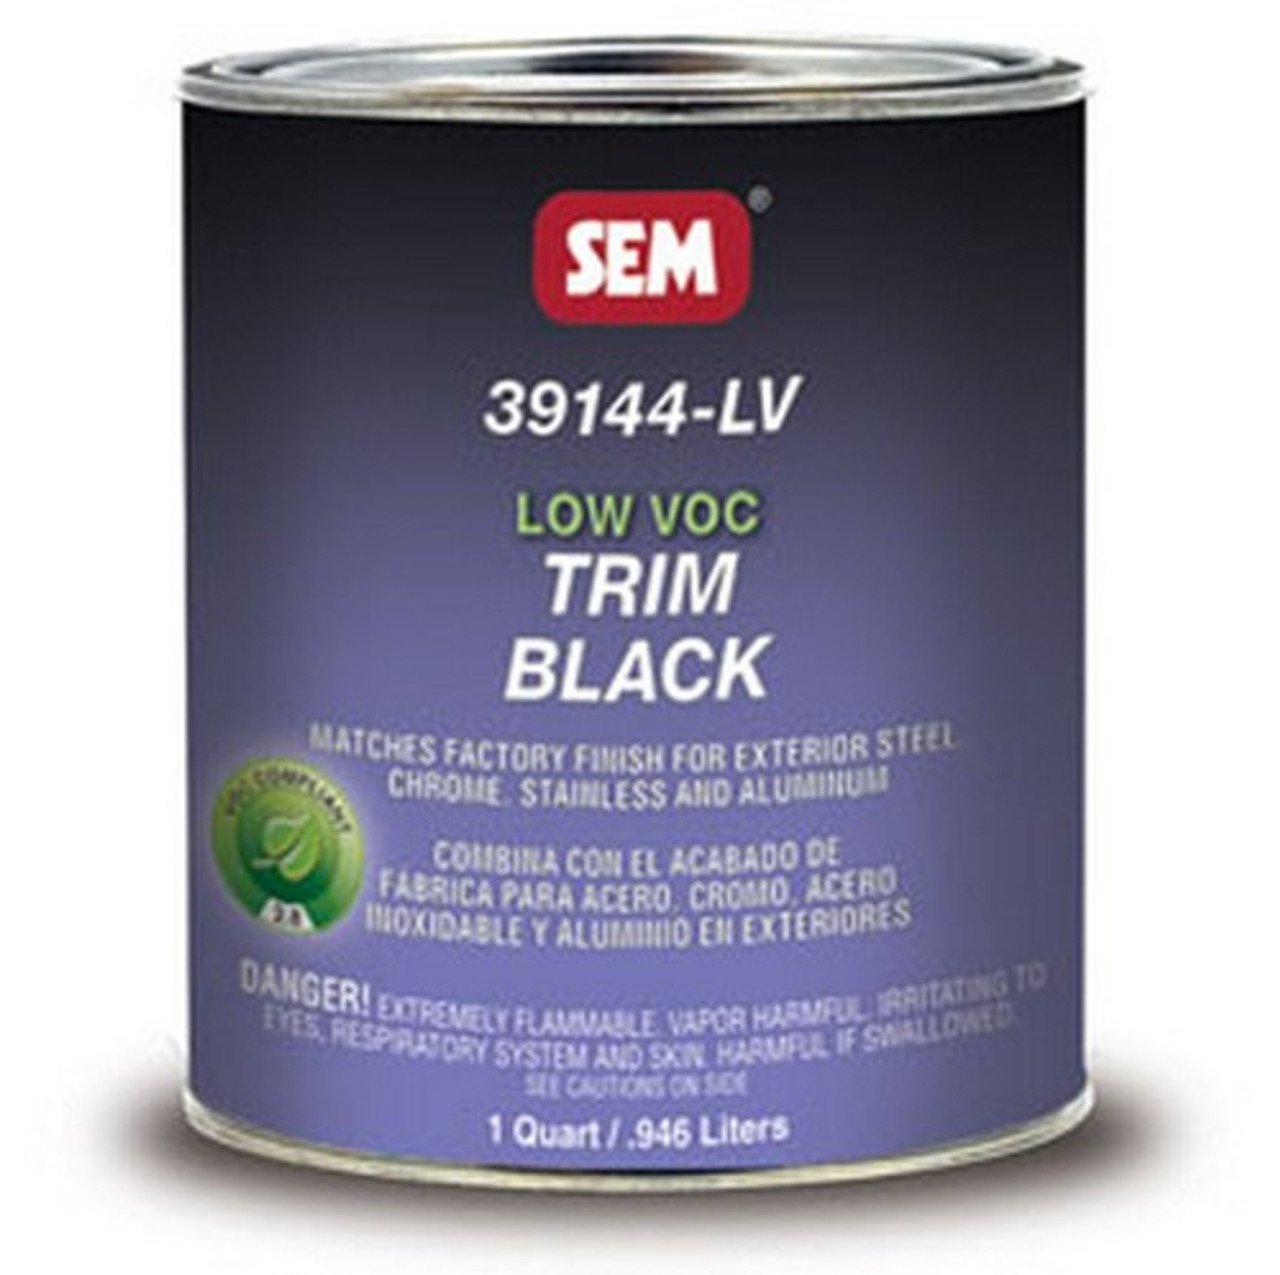 SEM 39144-LV Low VOC Trim Black Aerosol - 1 Quart